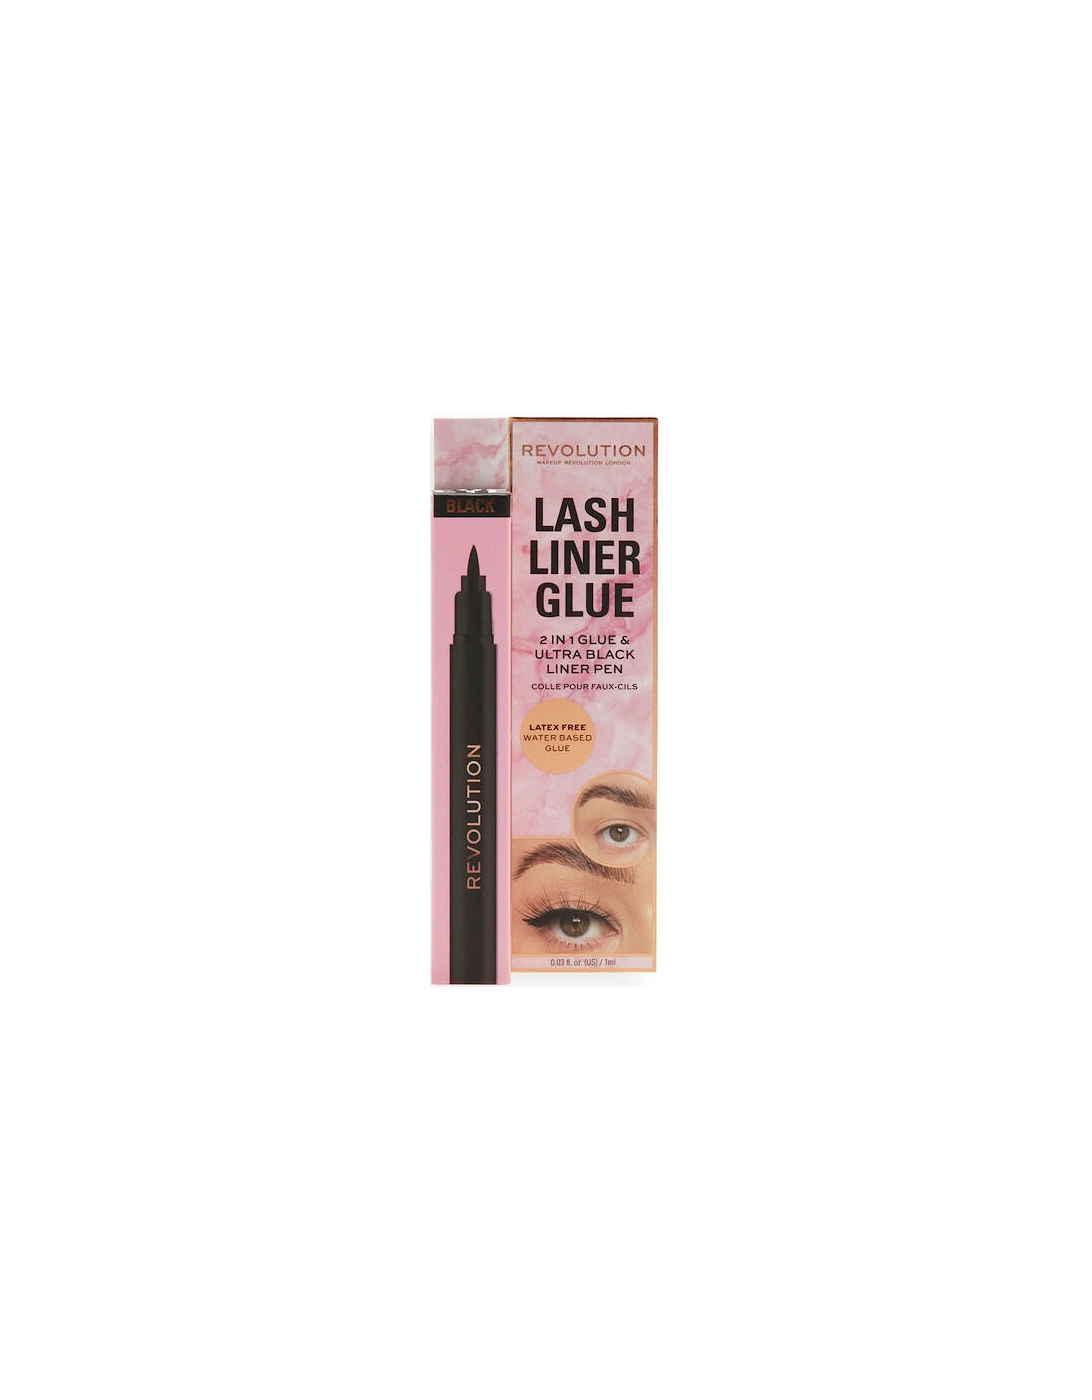 Makeup False Lash Liner Glue Black, 2 of 1